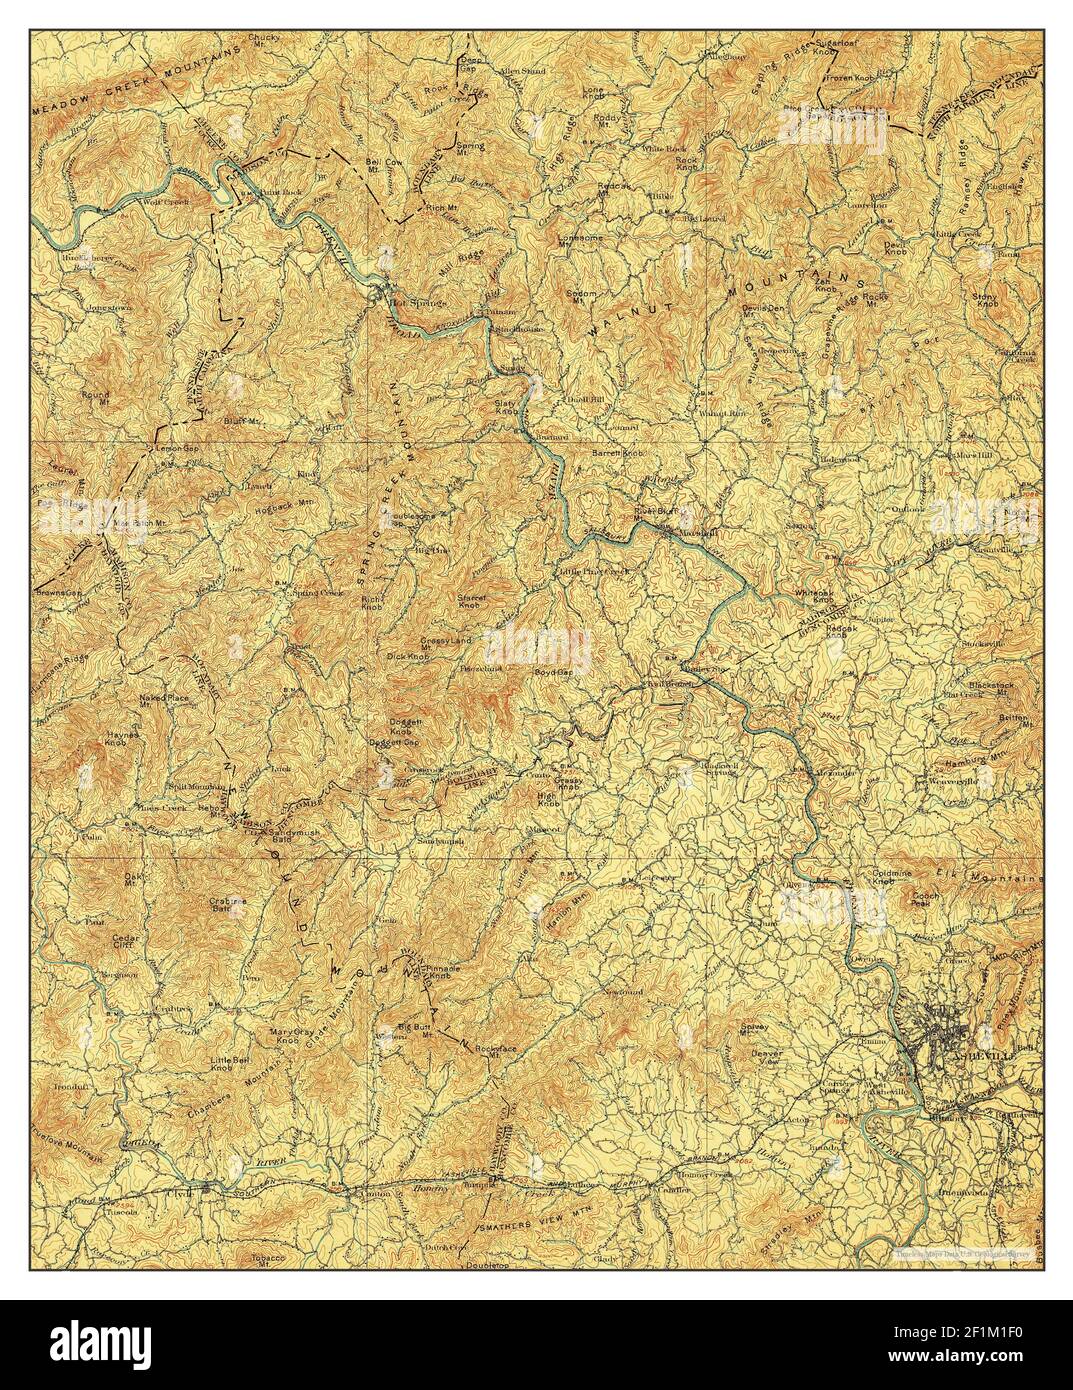 Asheville, North Carolina, map 1901, 1:125000, United States of America by Timeless Maps, data U.S. Geological Survey Stock Photo